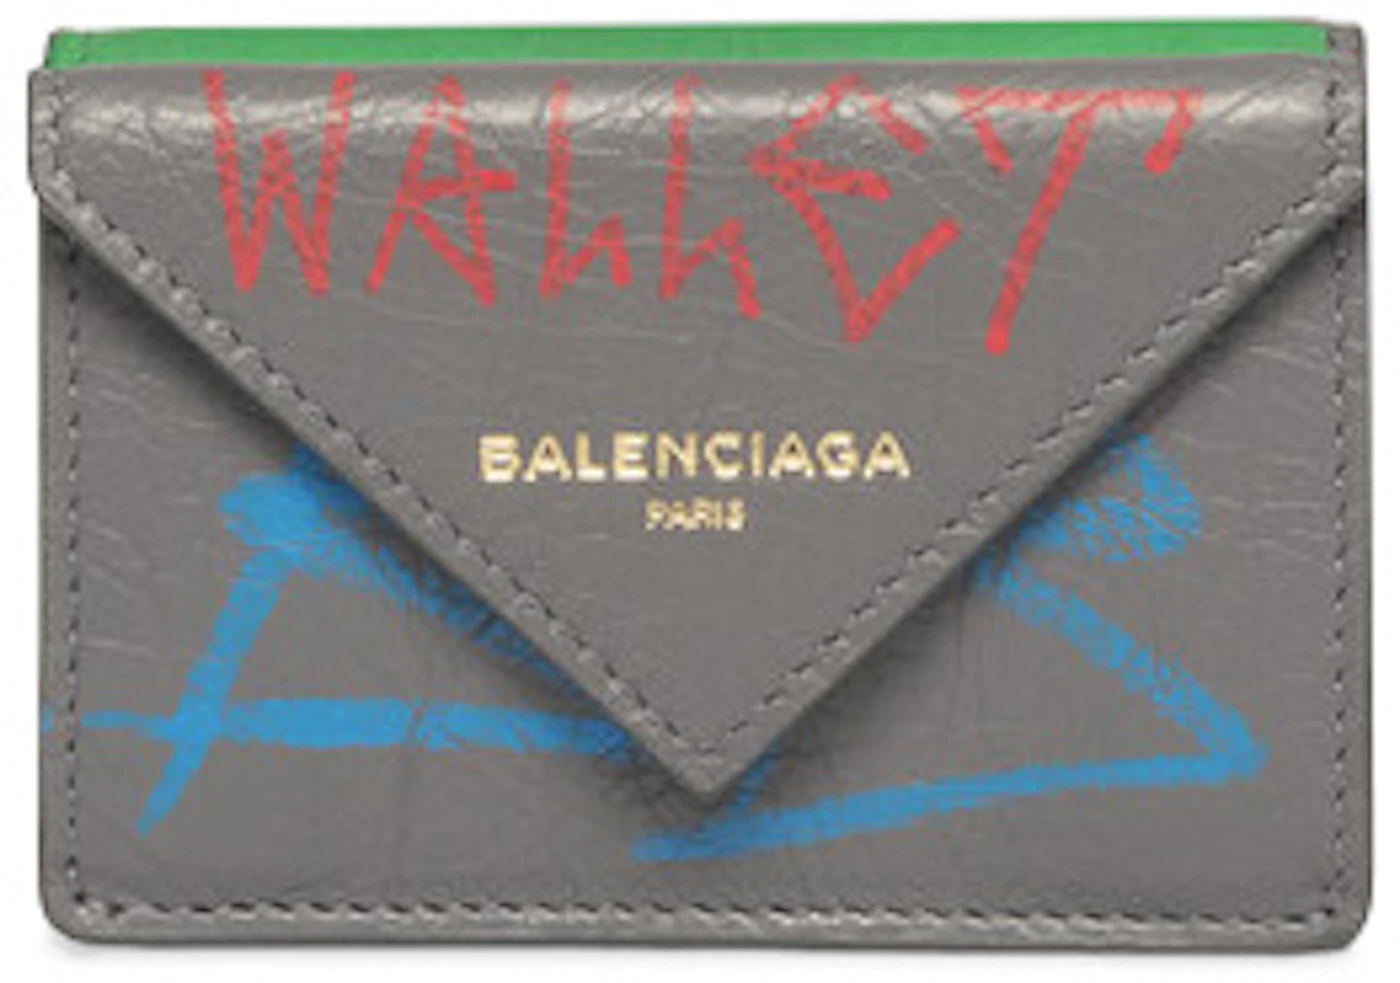 Balenciaga Papier Wallet Graffiti Mini Beige/Red in Lambskin Leather with Silver-tone US